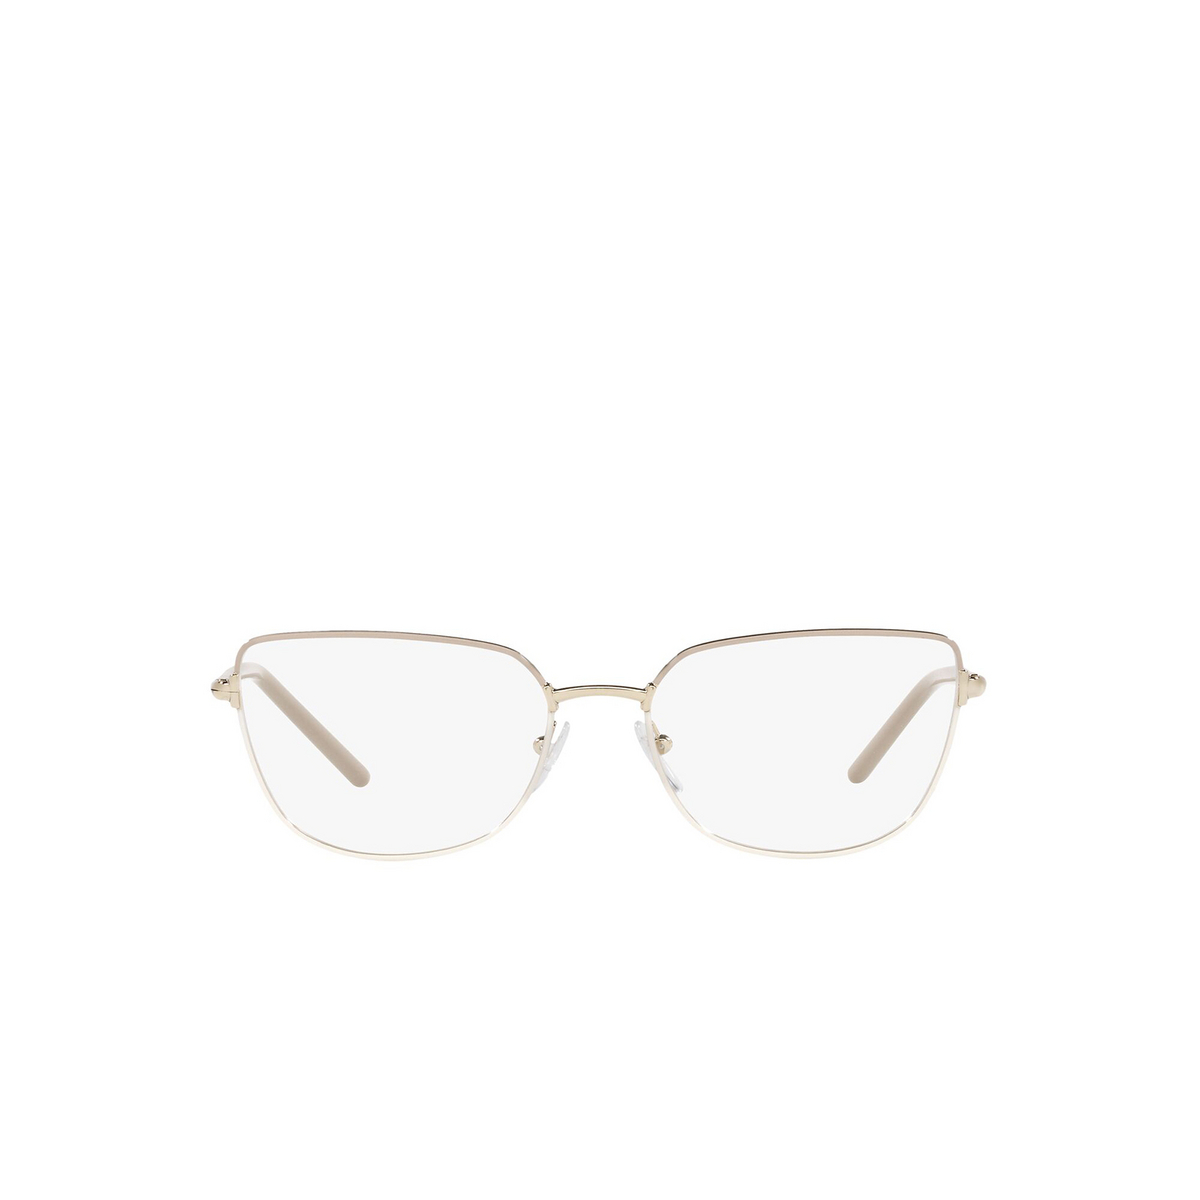 Prada PR 59YV Eyeglasses 06I1O1 Beige / White - front view